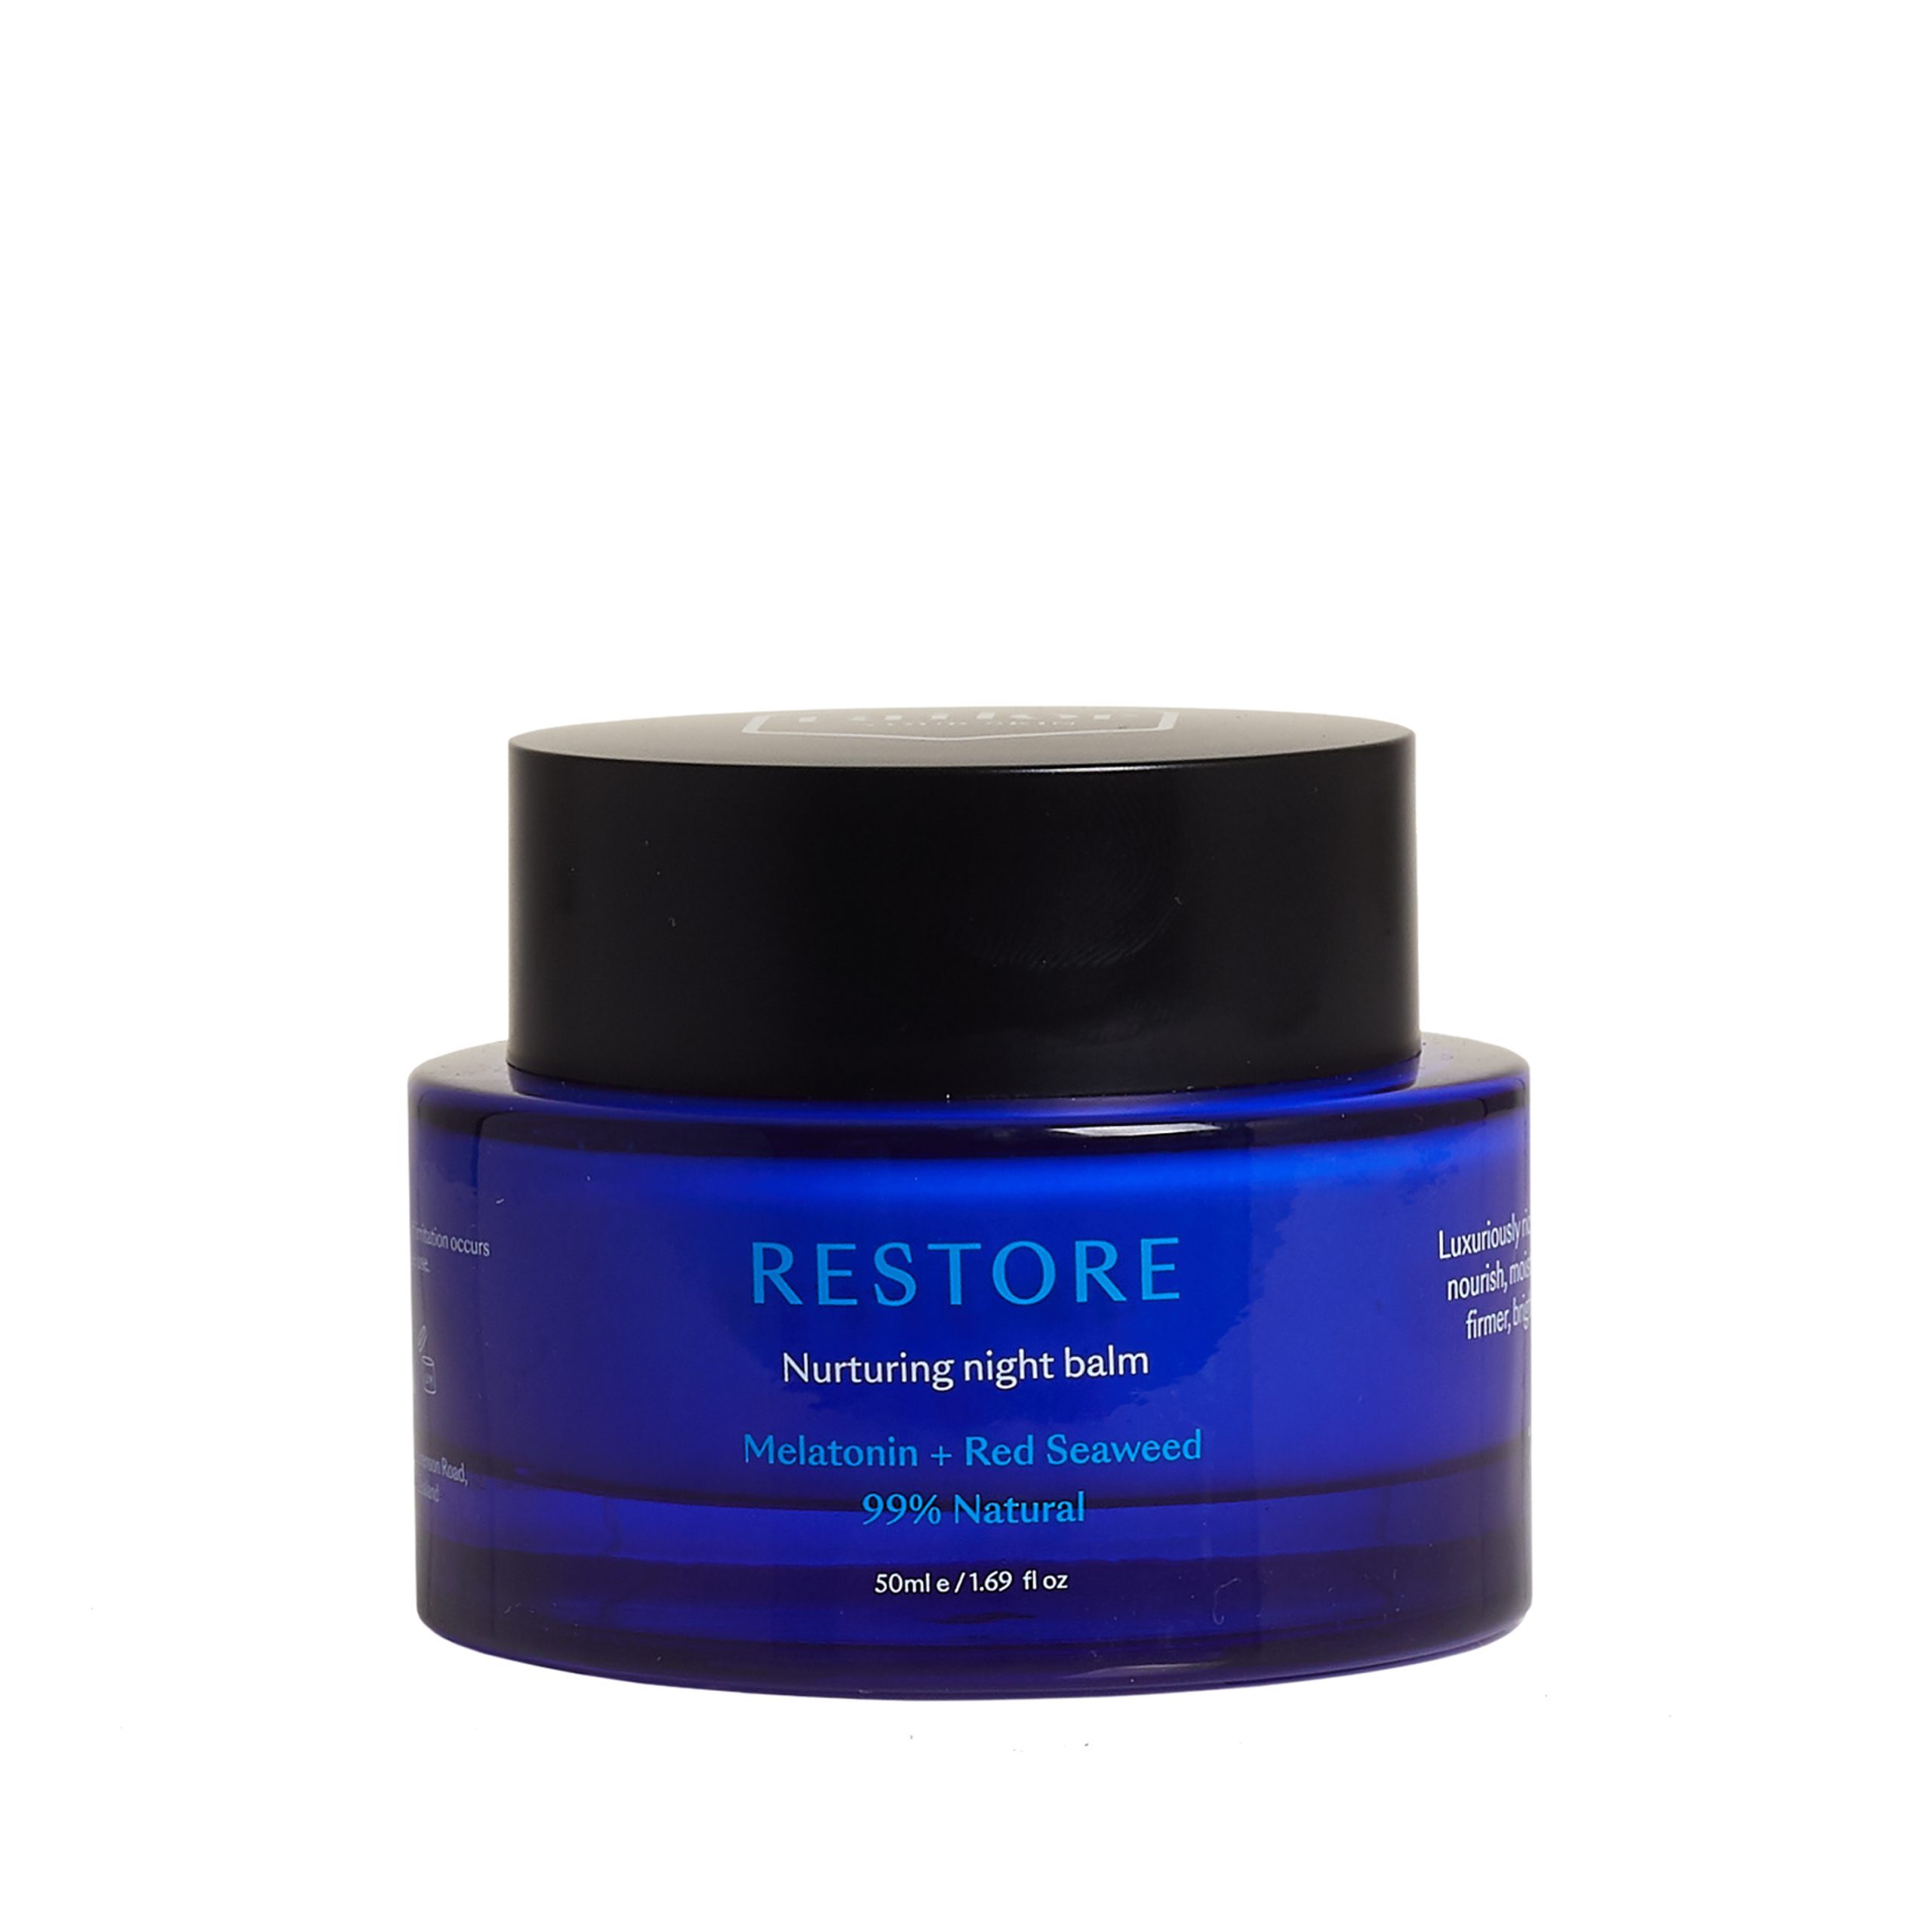 Tailor Skincare Restore night balm night cream moisturiser